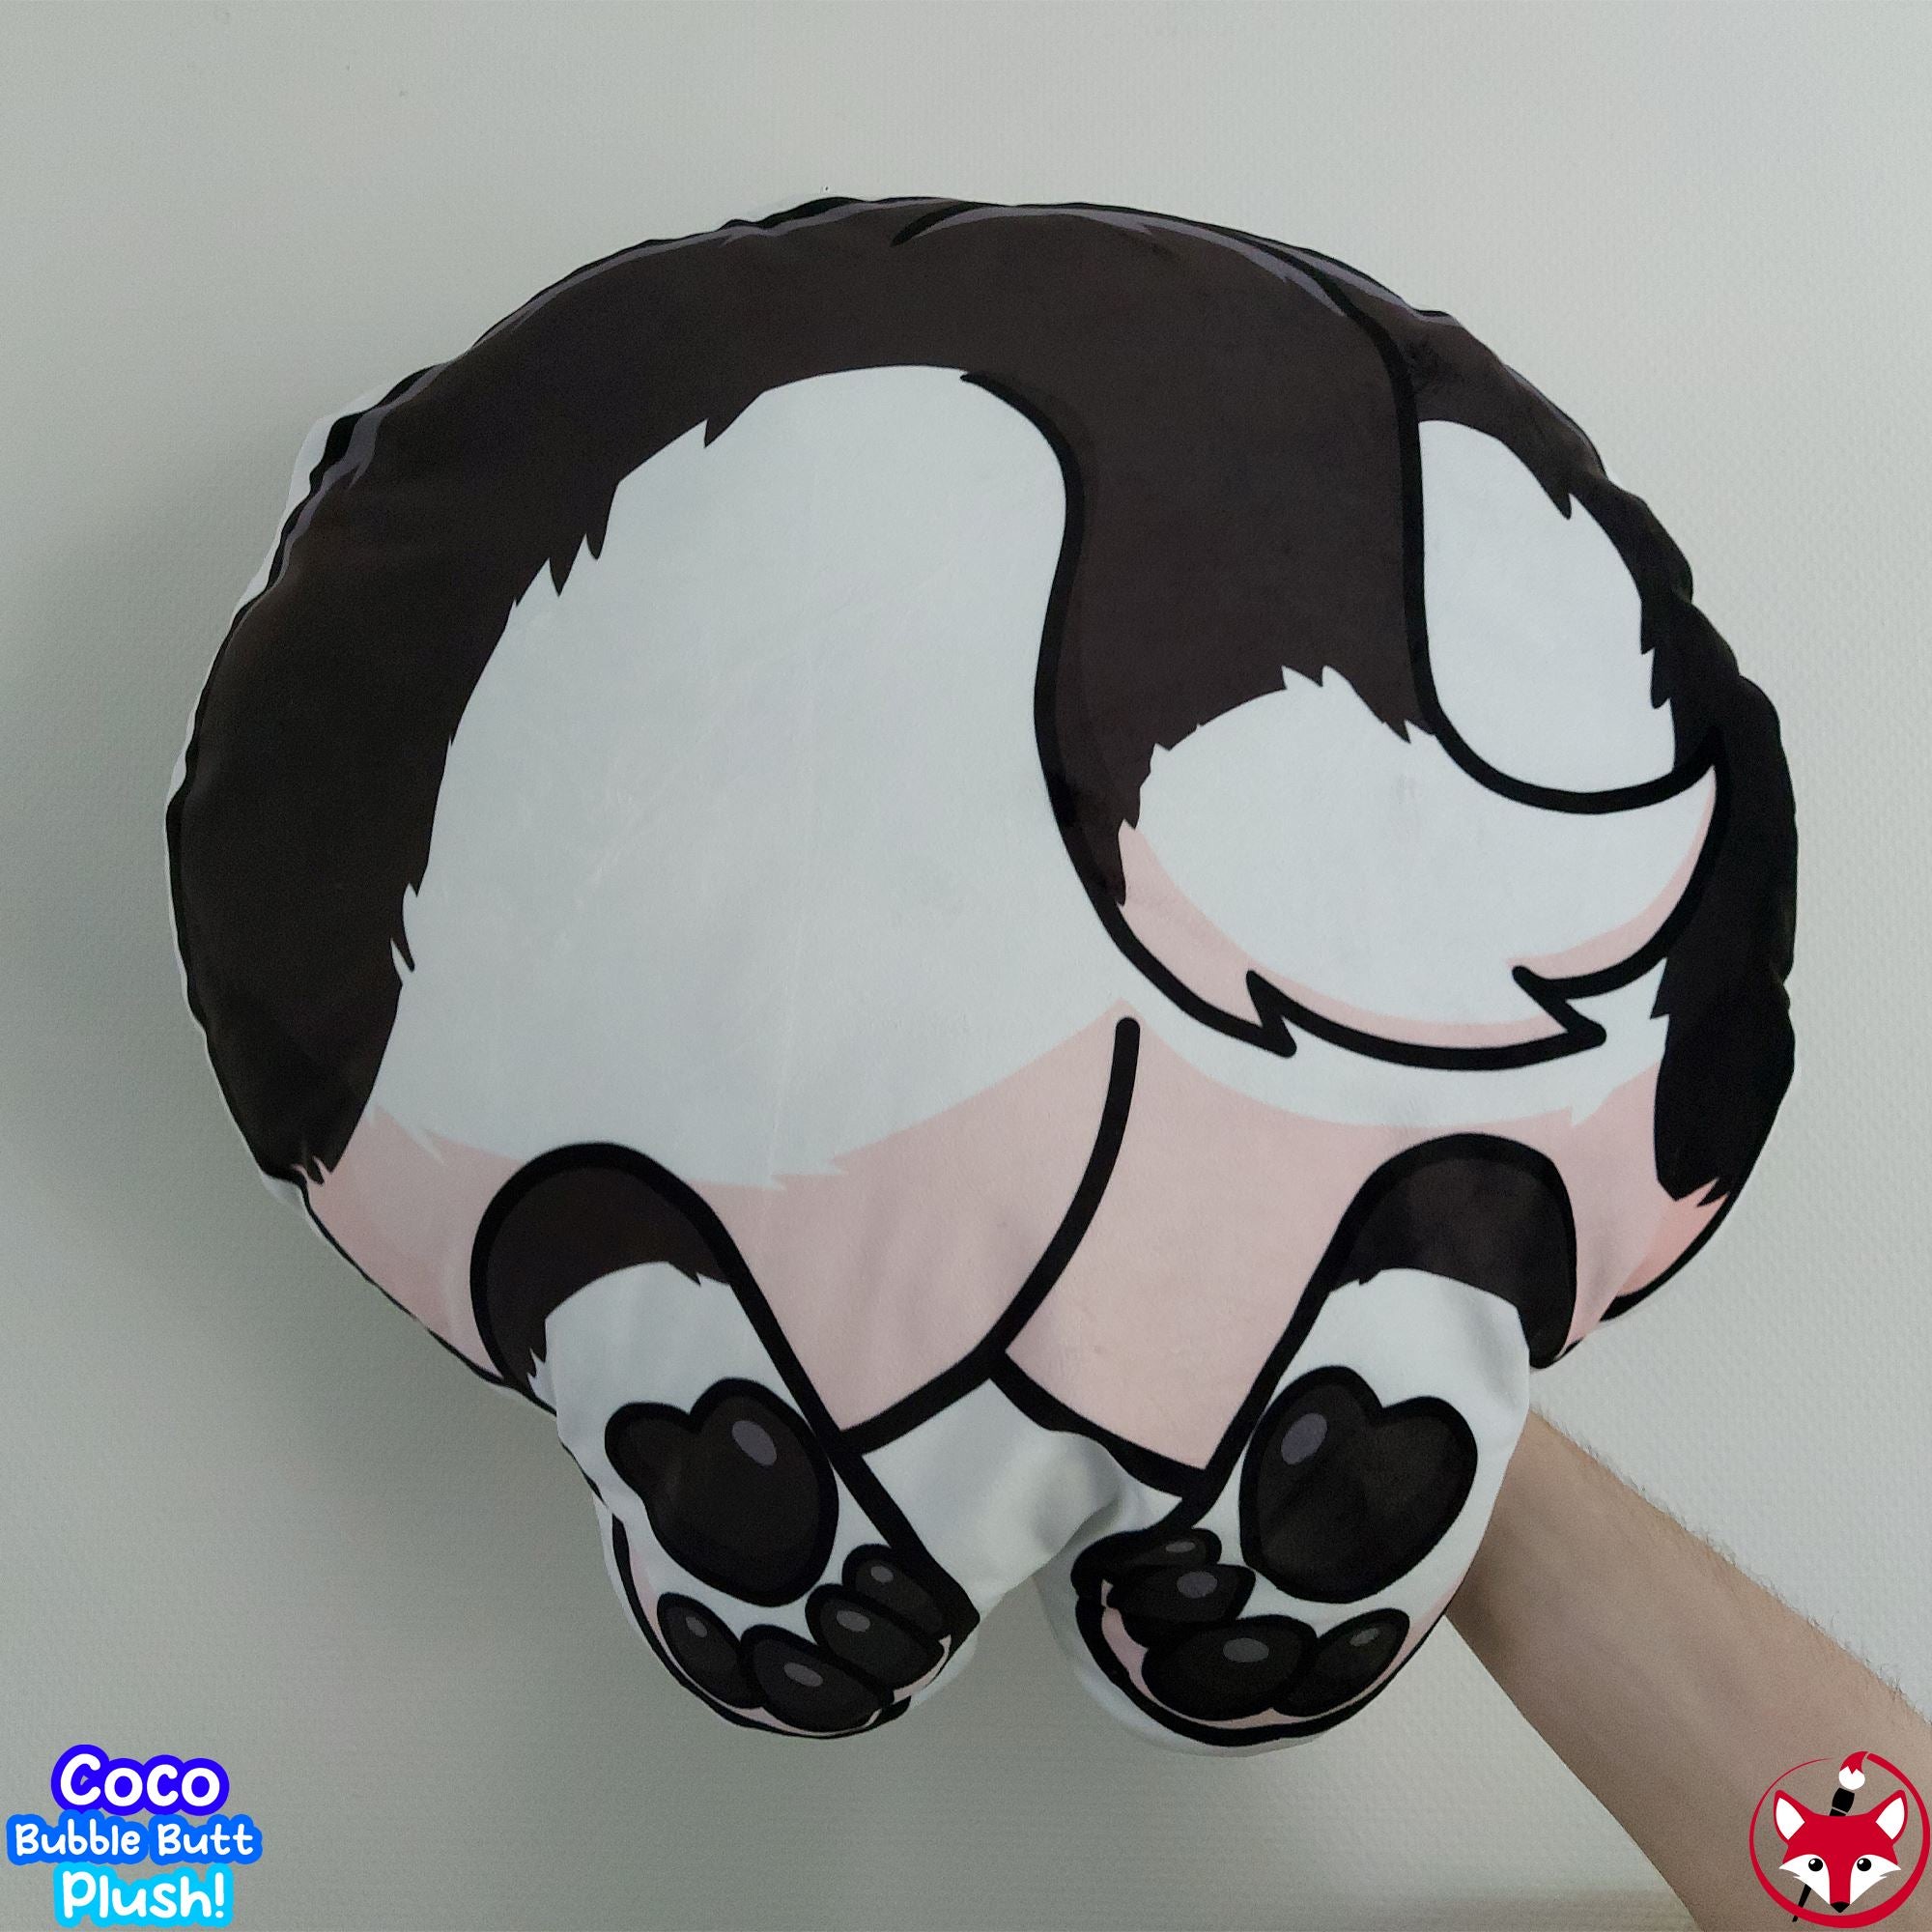 Coco Bubble Butt Plush Pillow Pillow Wolvinny 